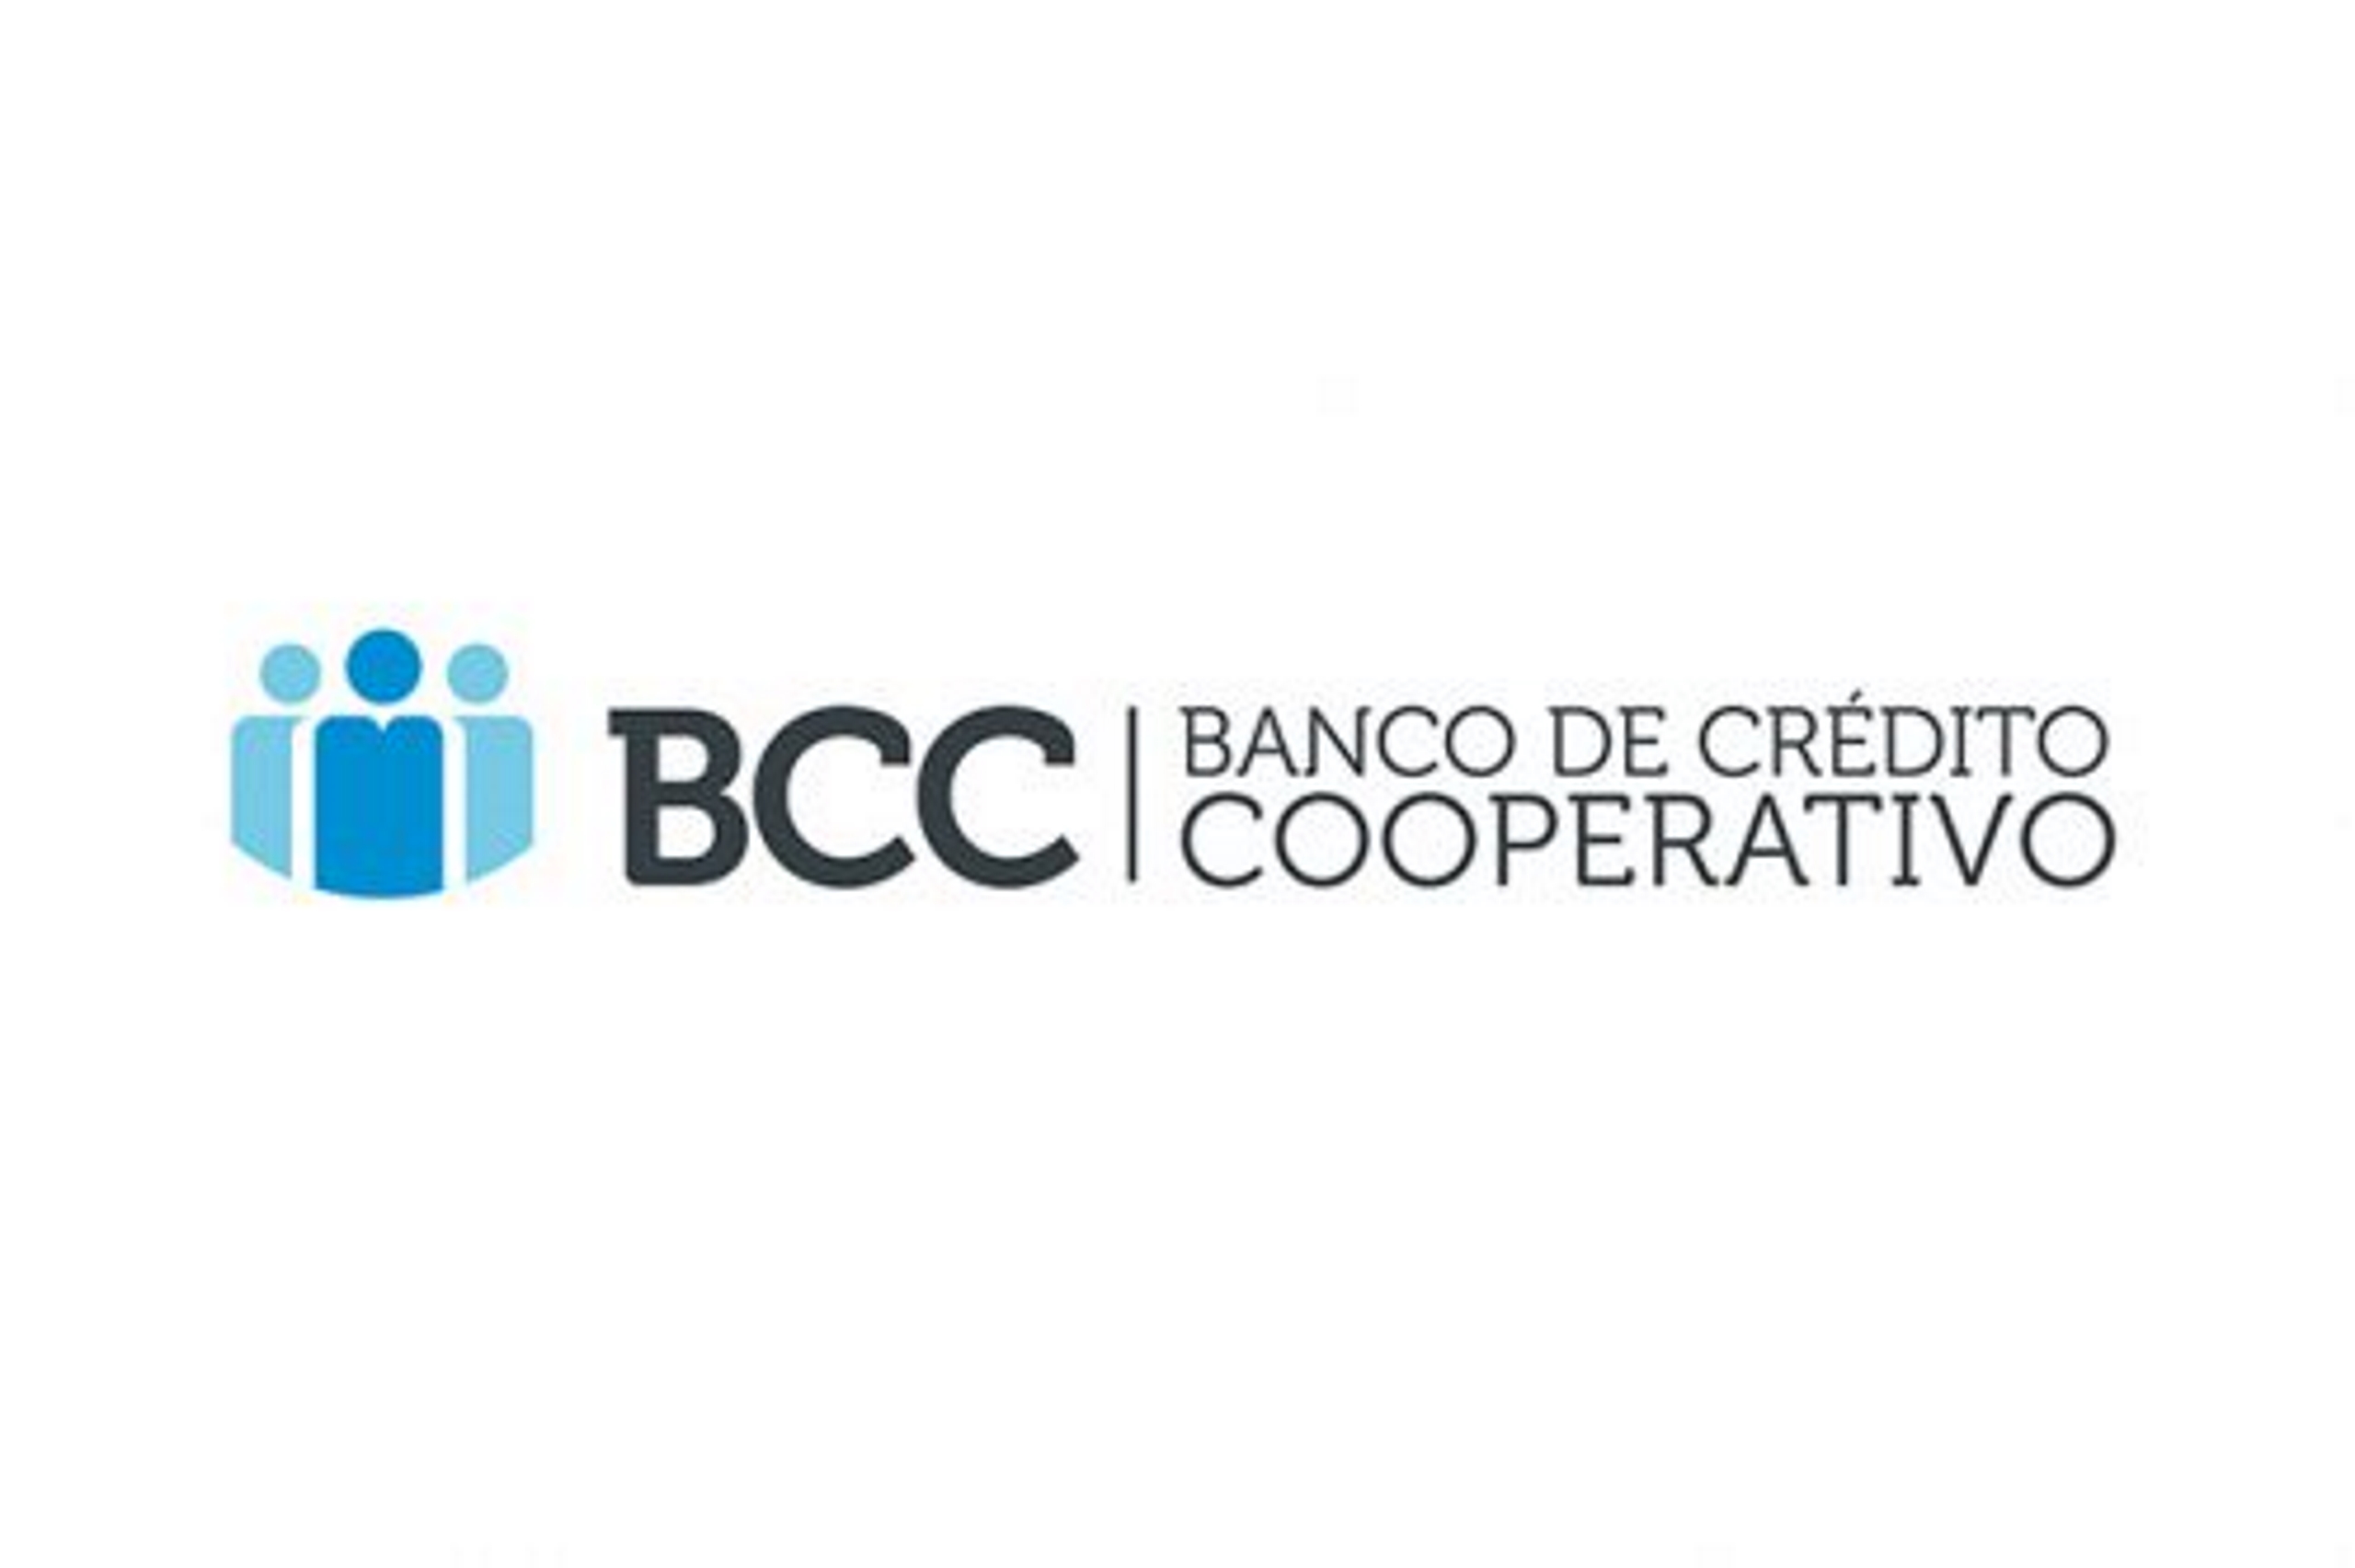 EADTrust Banco de Crédito Cooperativo (BCC) recibe la homologación de FMDA expedida por EADTrust